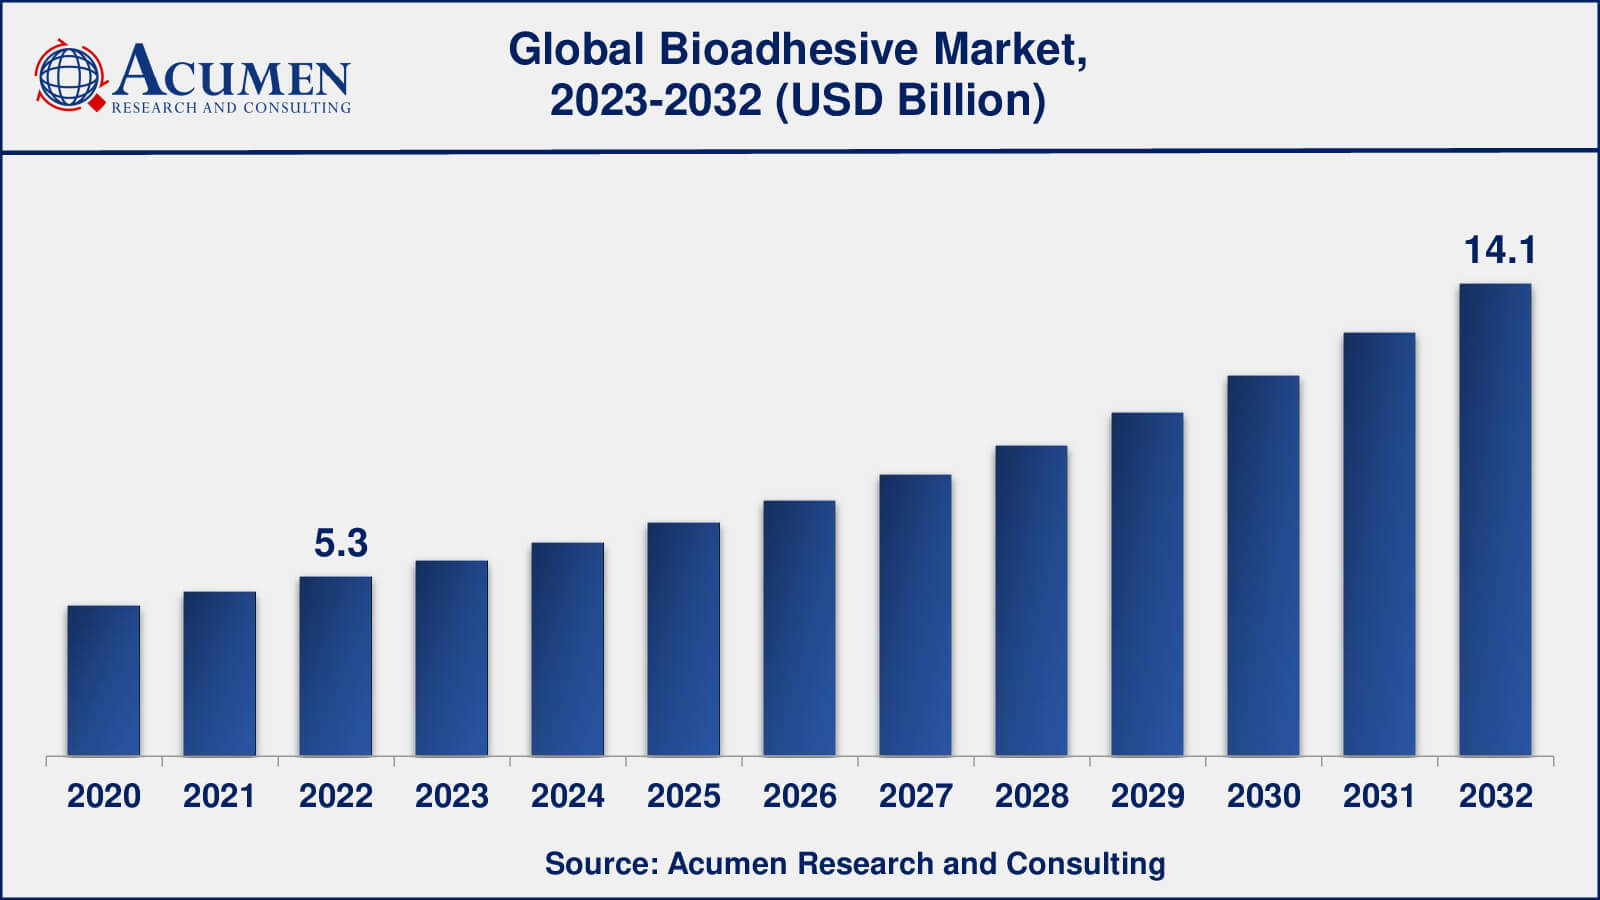 Global Bioadhesive Market Dynamics